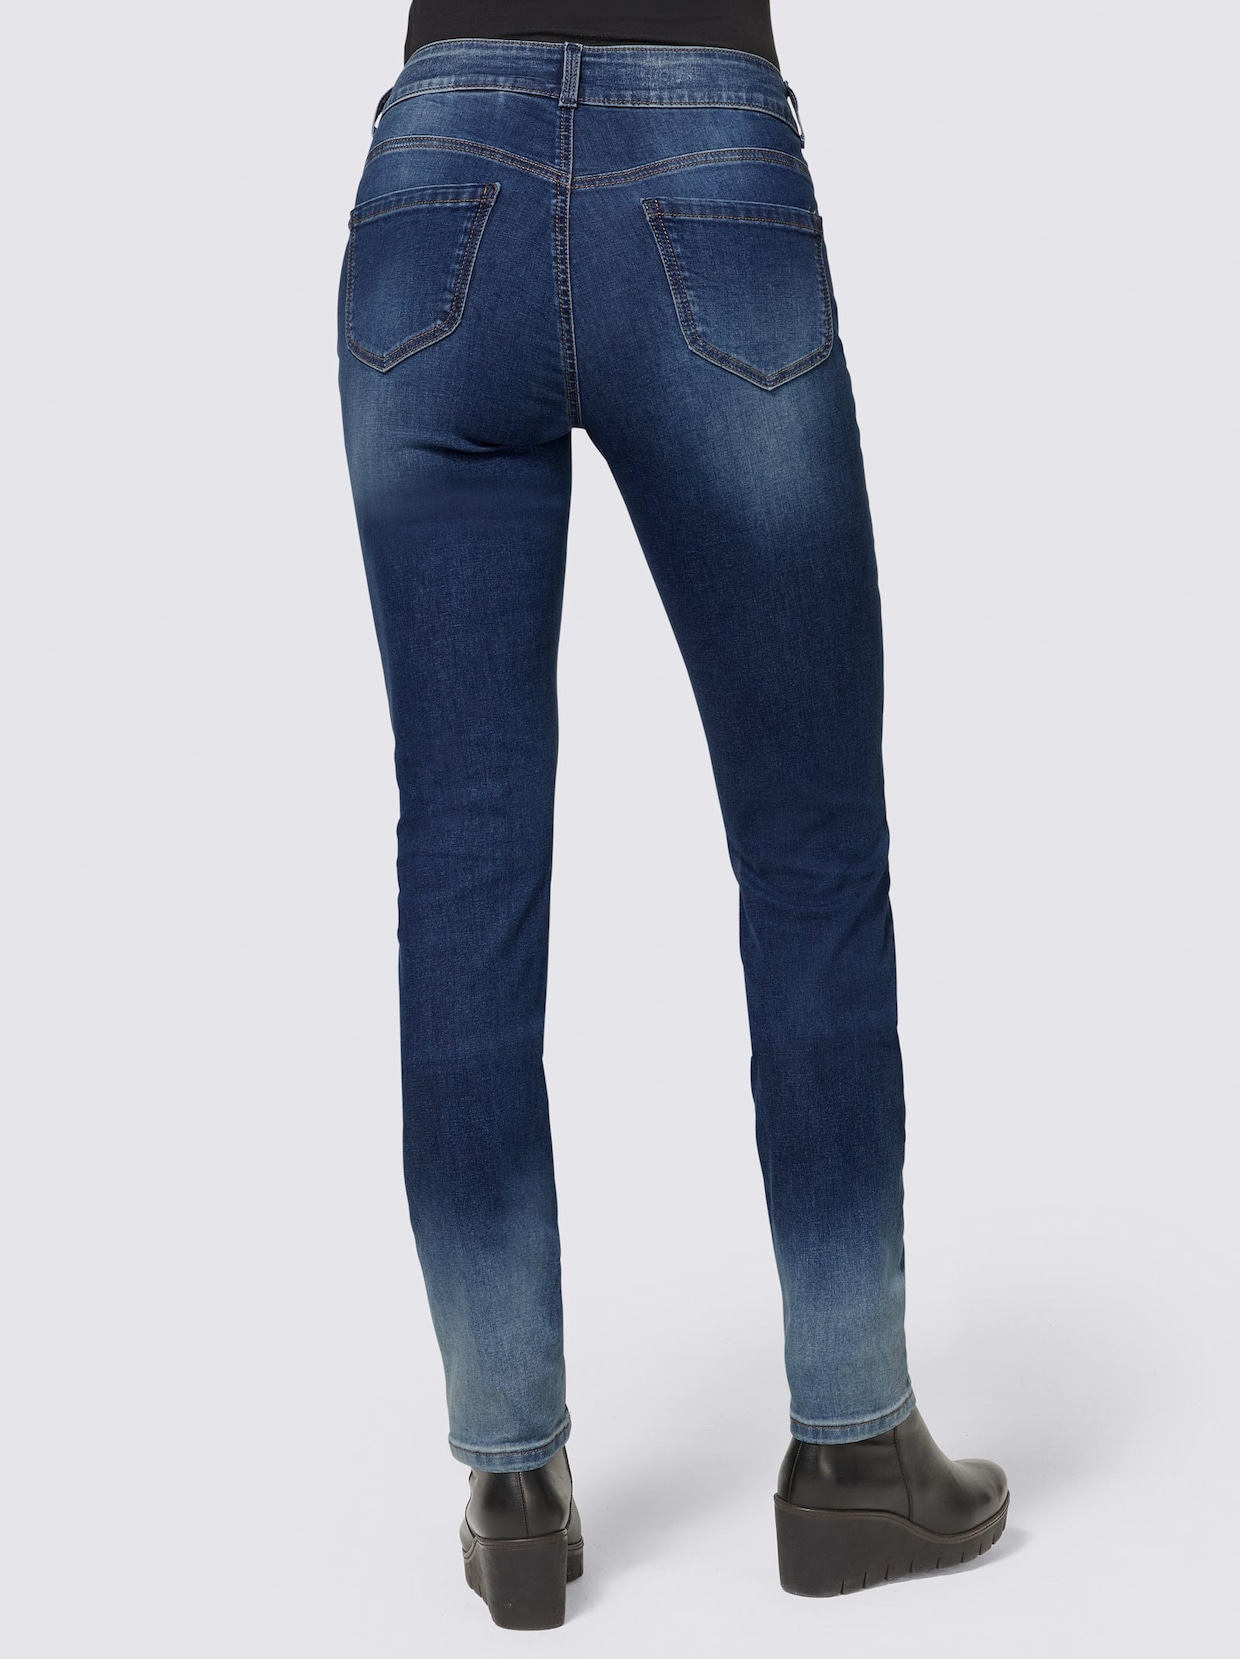 Linea Tesini Jeans - blue-stone-washed